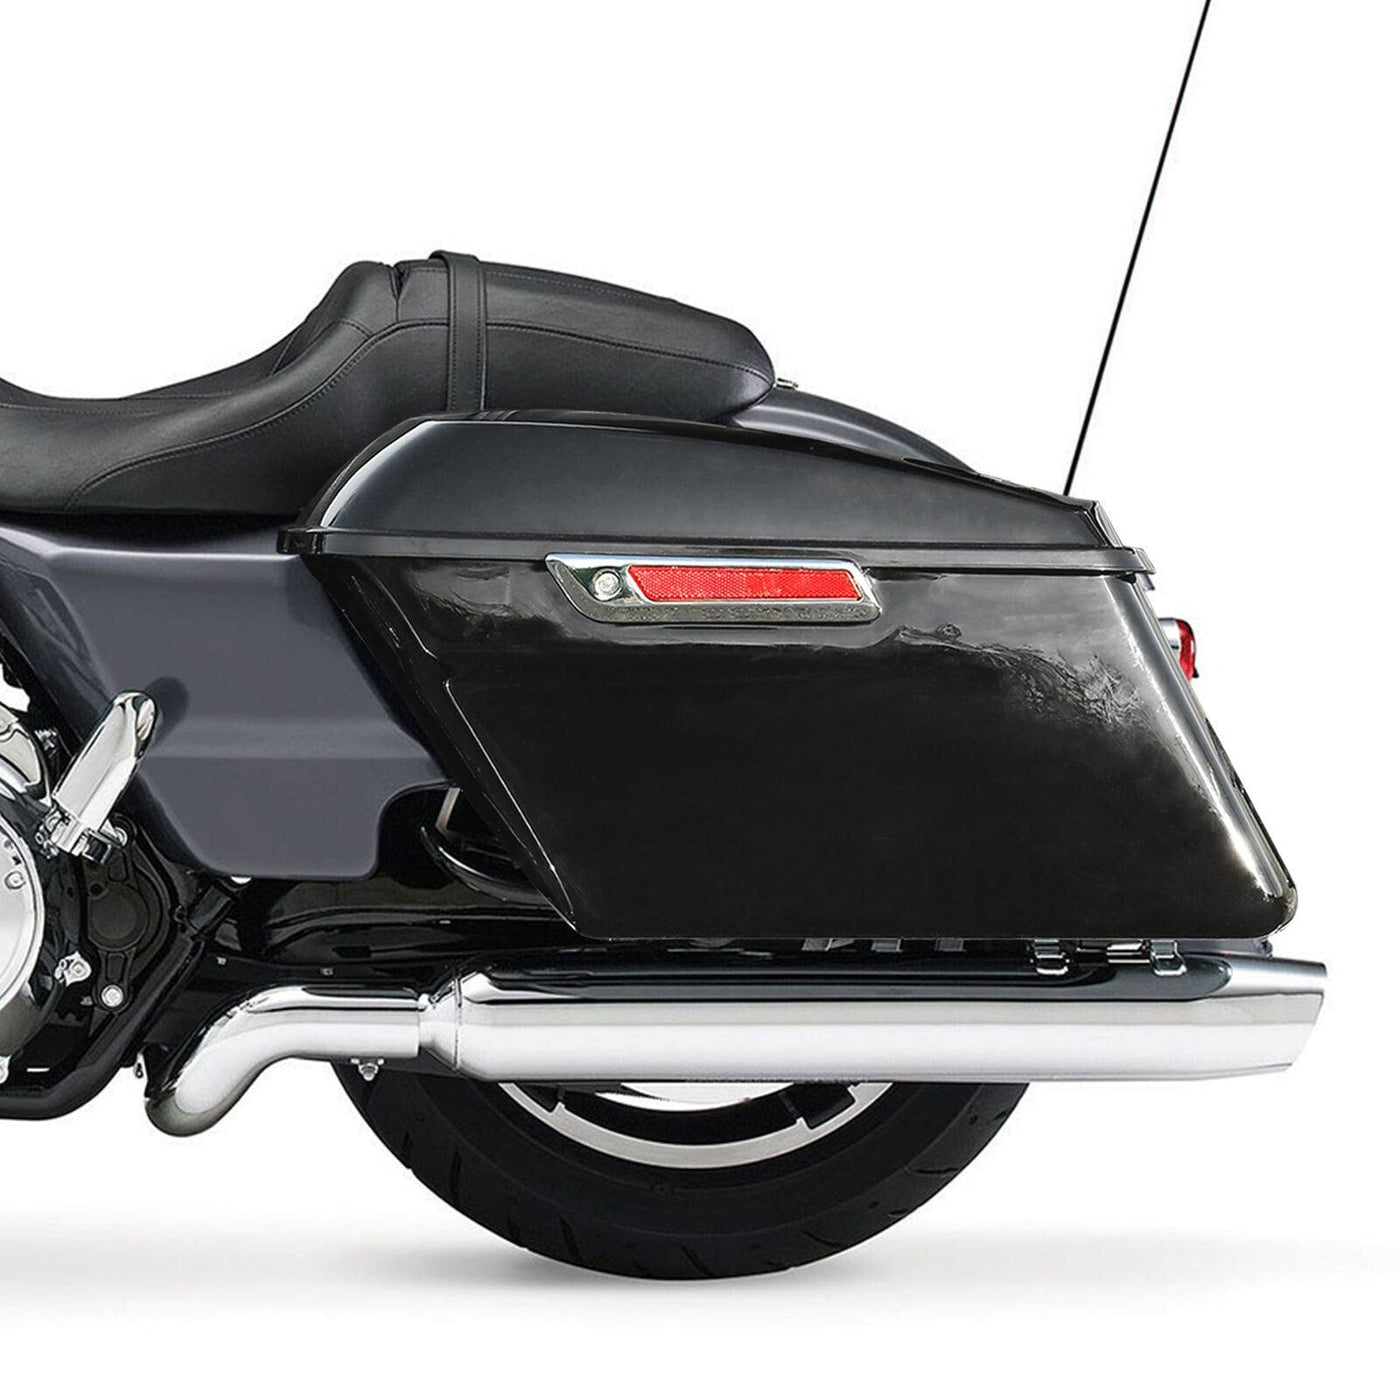 Vivid Black Hard Saddle Bags Saddlebags Fit For Harley Touring FLHR FLHT 93-13 - Moto Life Products